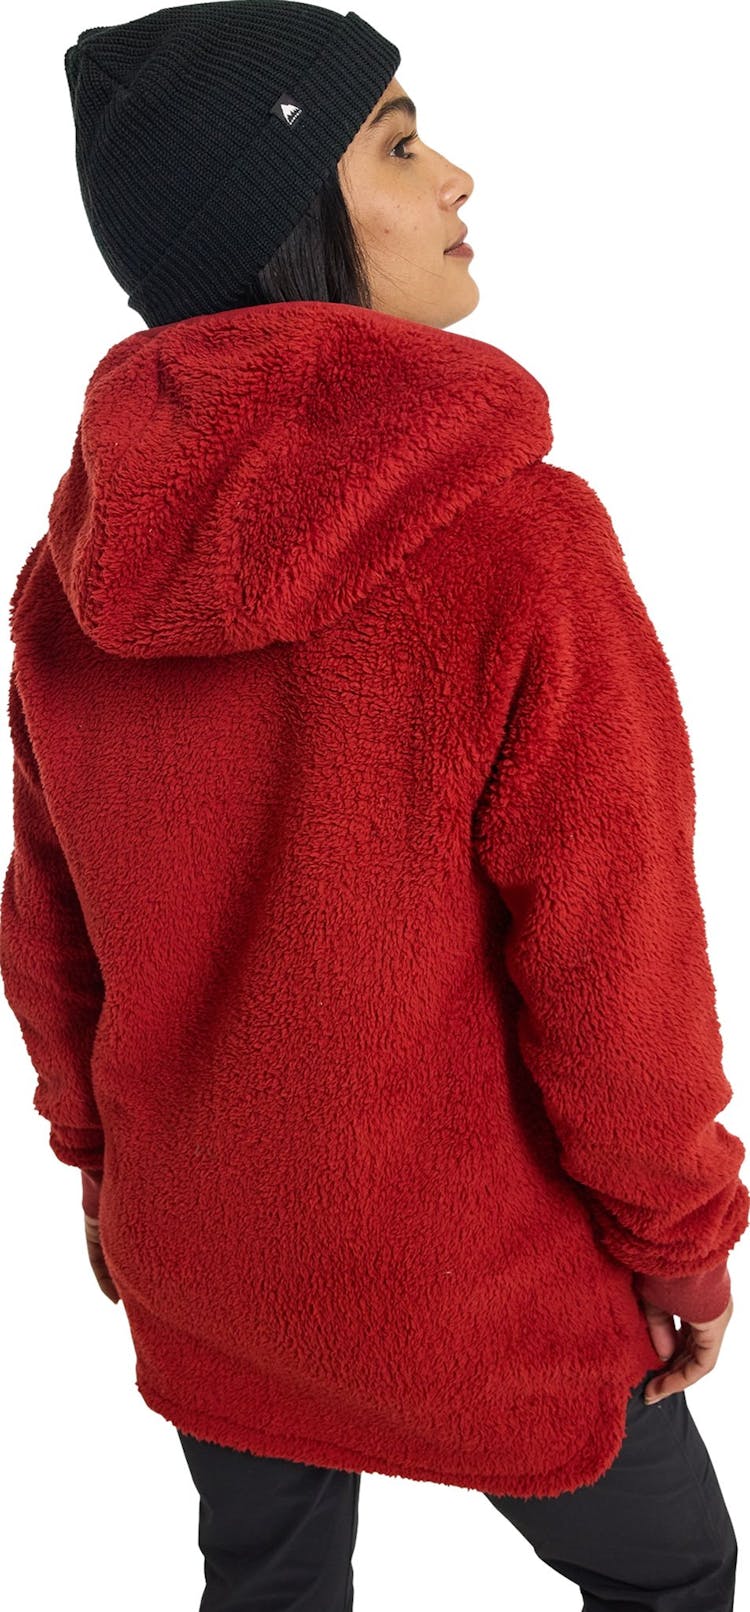 Product gallery image number 3 for product Minxy Full-Zip Fleece Jacket - Women's